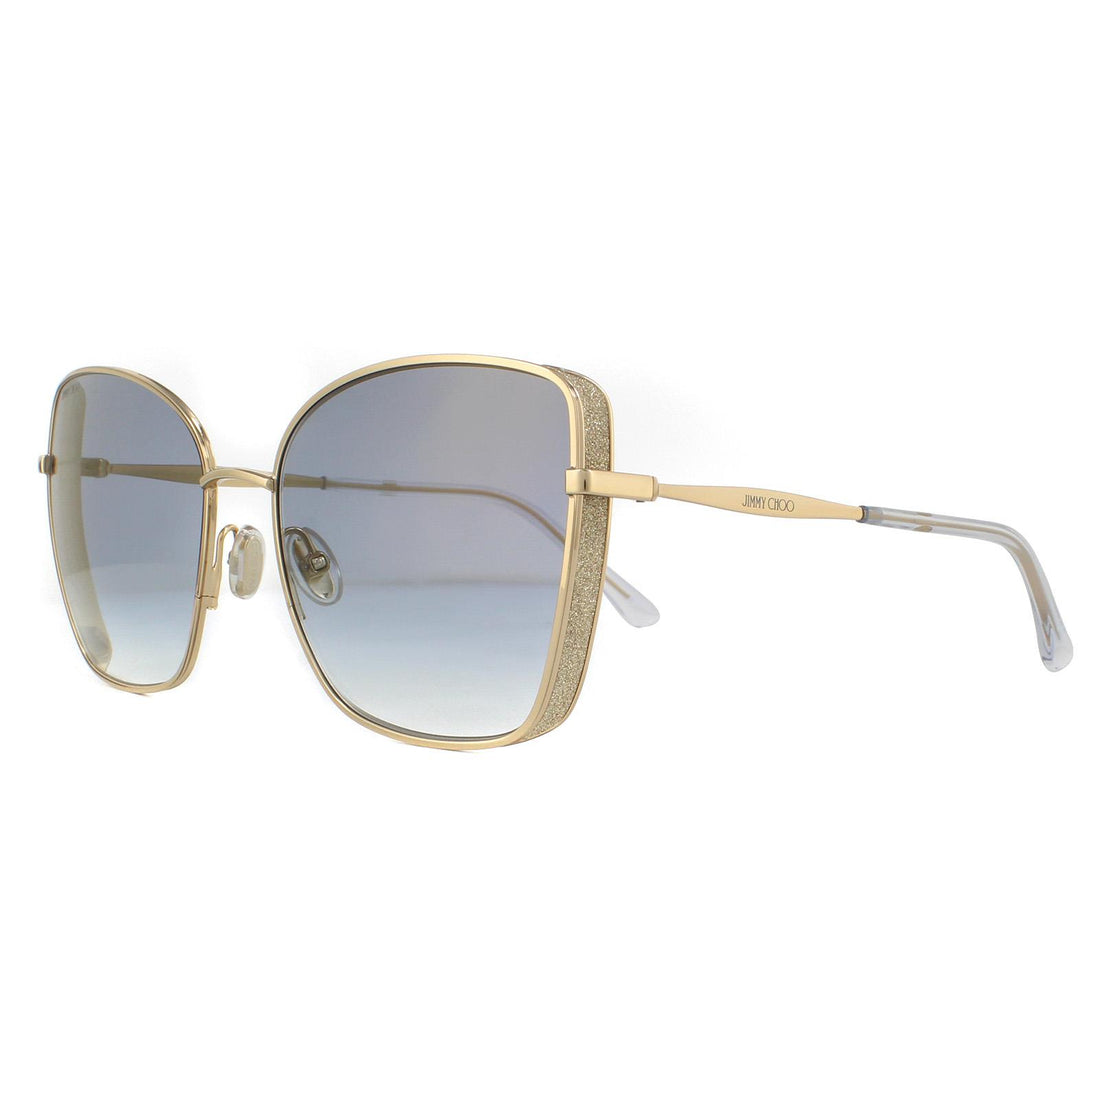 Jimmy Choo Sunglasses ALEXIS/S 000 1V Rose Gold Blue Gradient